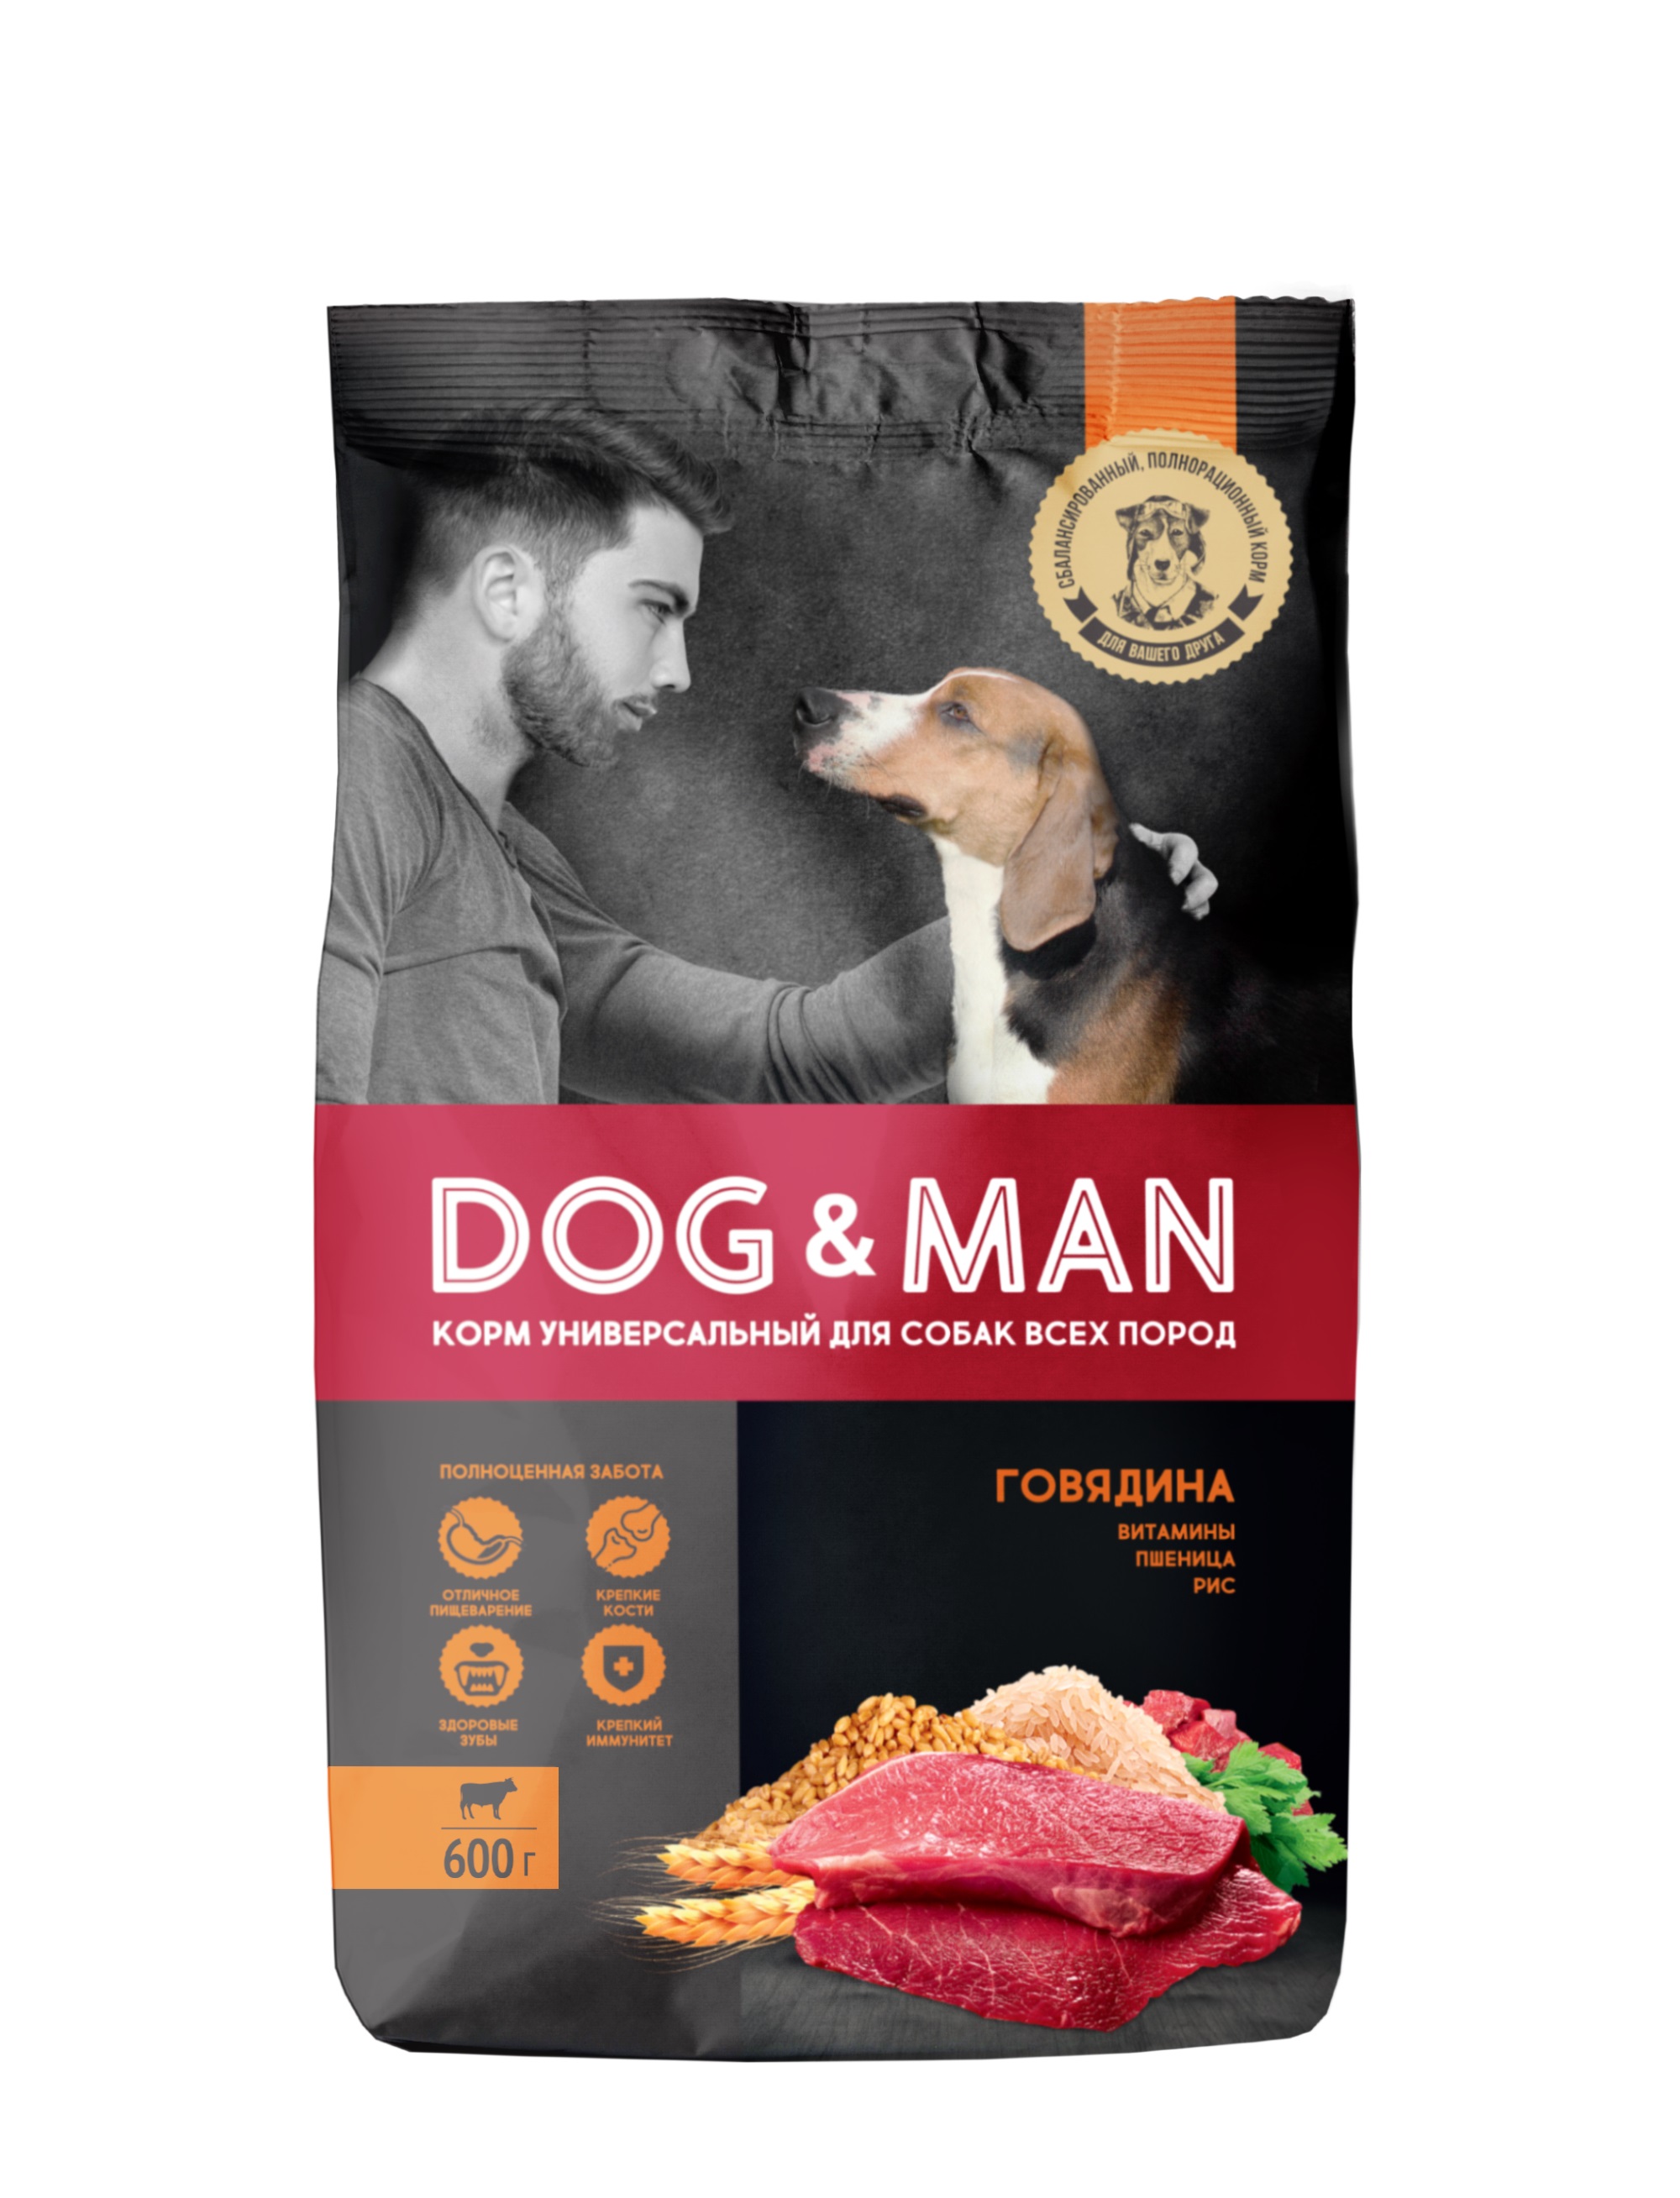 Сухой корм для собак Dog&Man для всех пород, говядина, 0,66кг